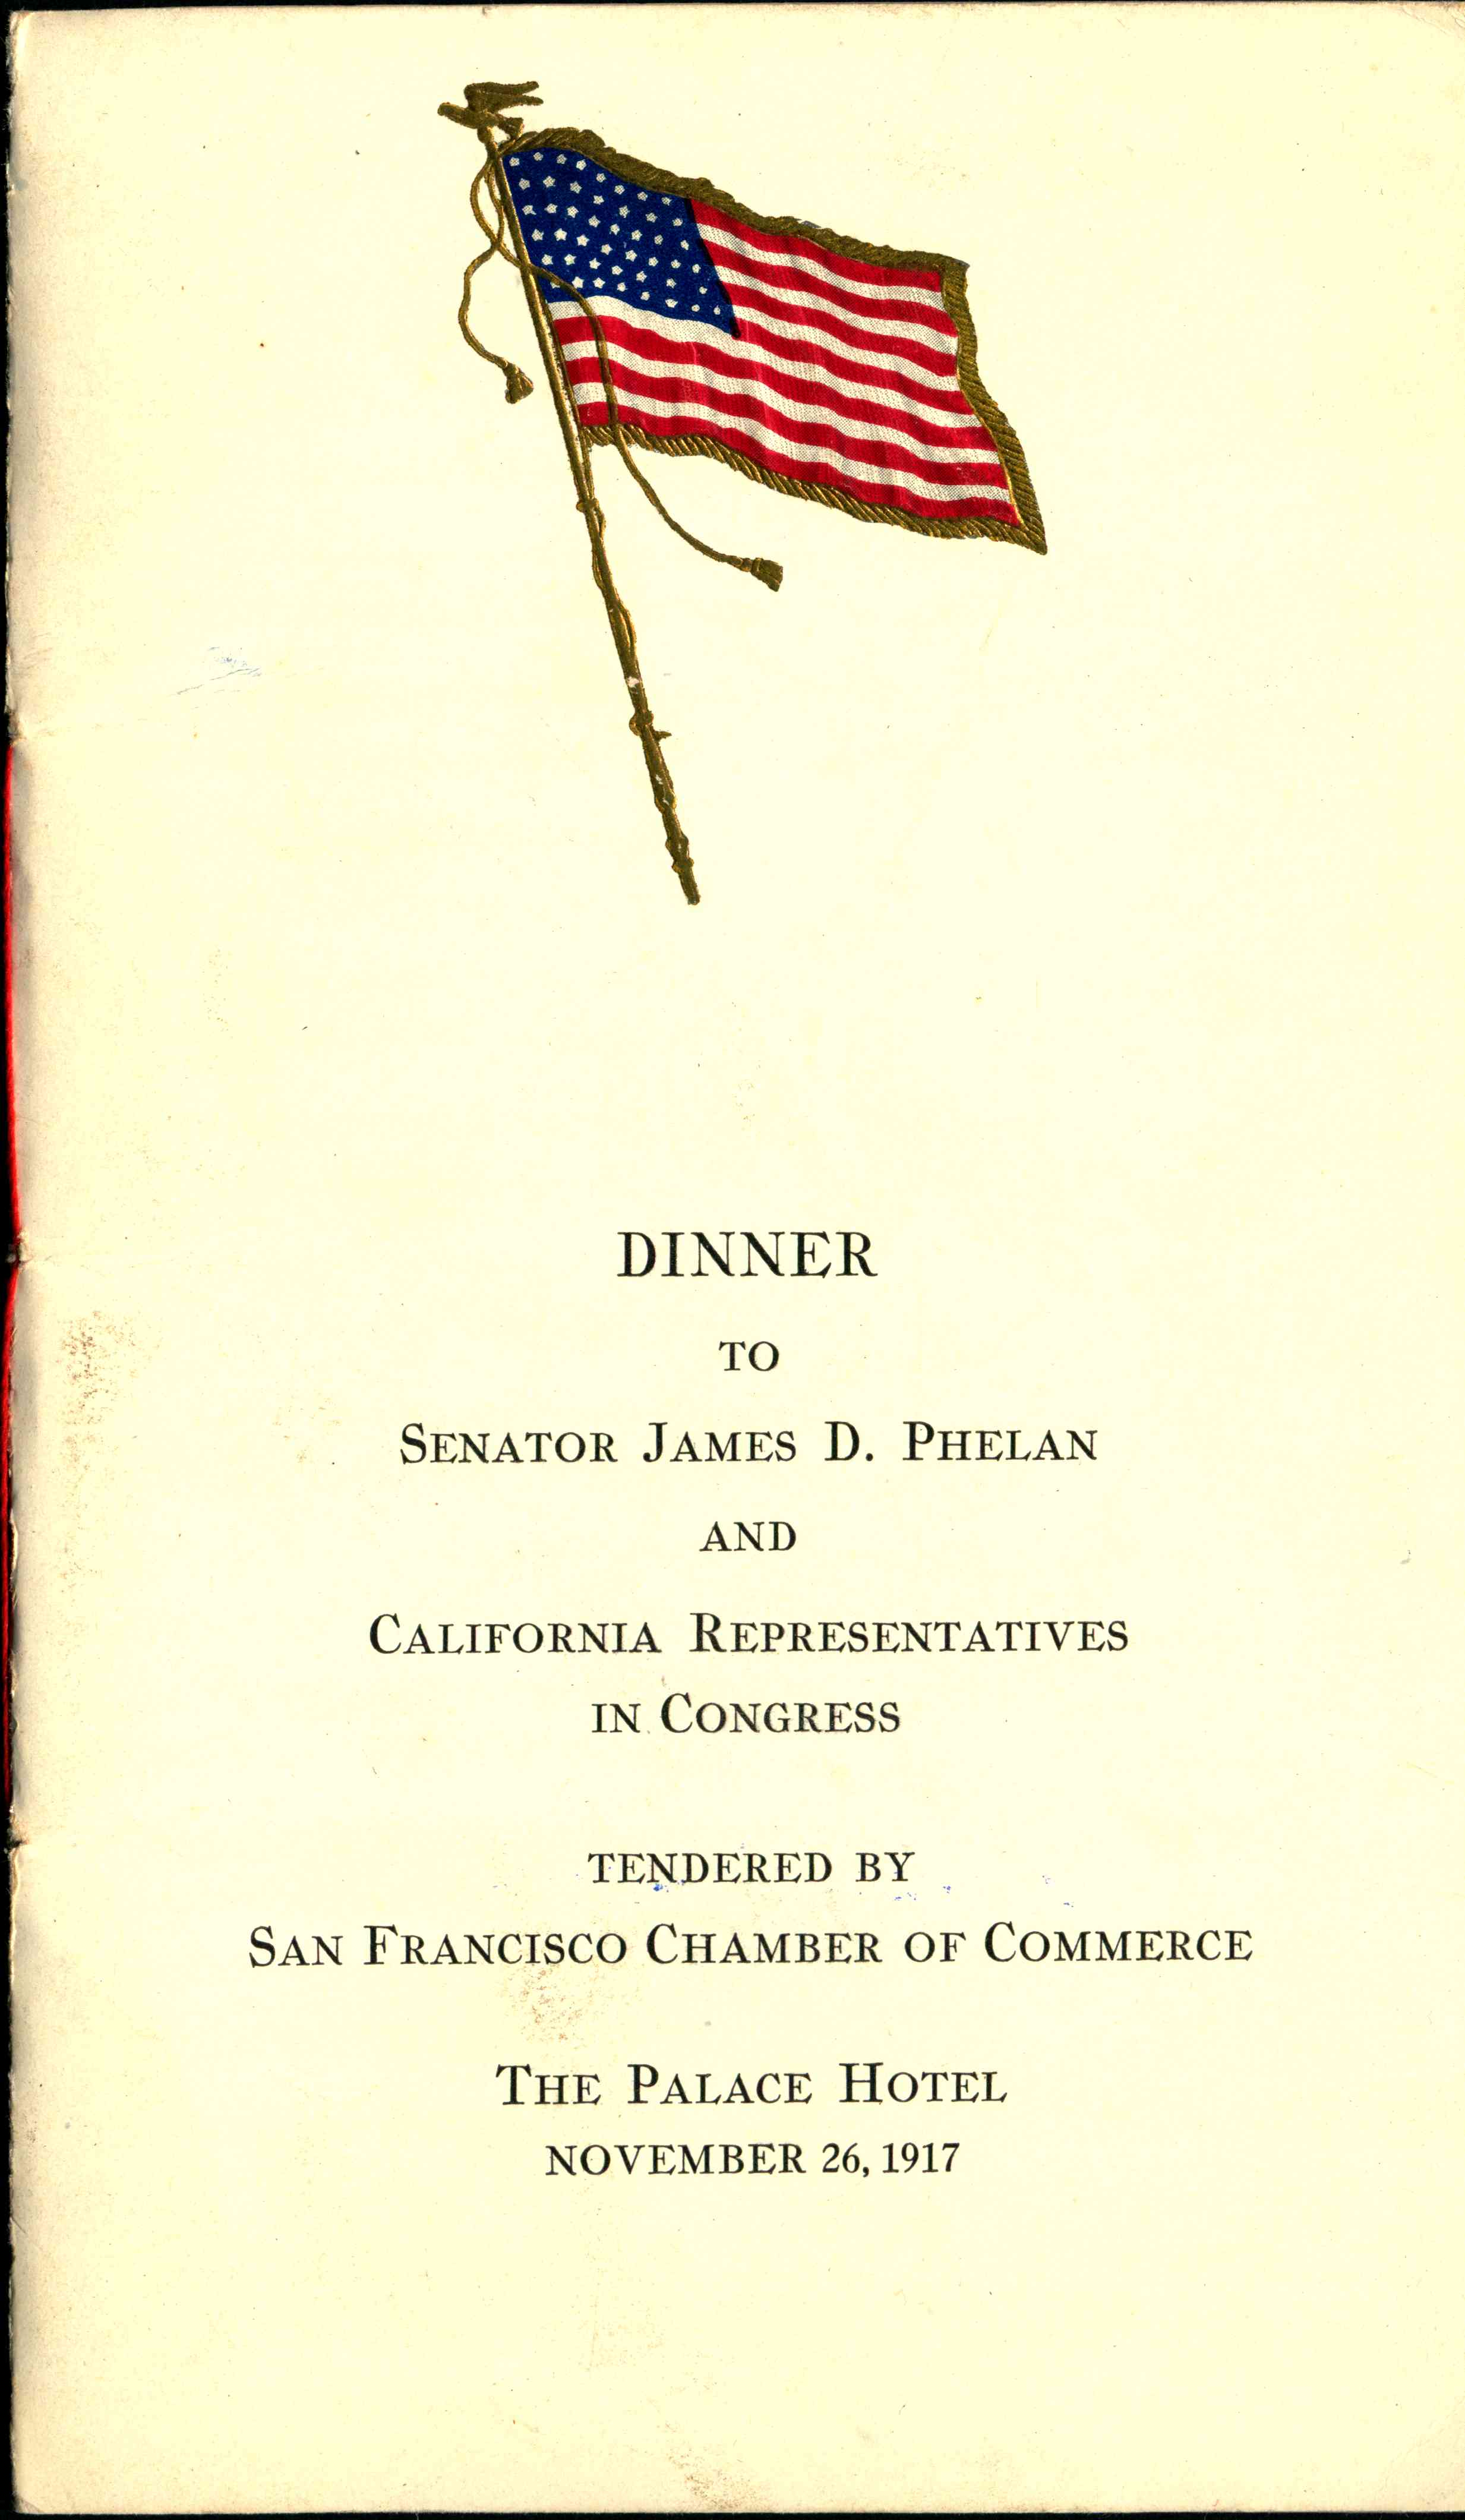 Dinner to Senator James D. Phelan and California Representatives in Congress